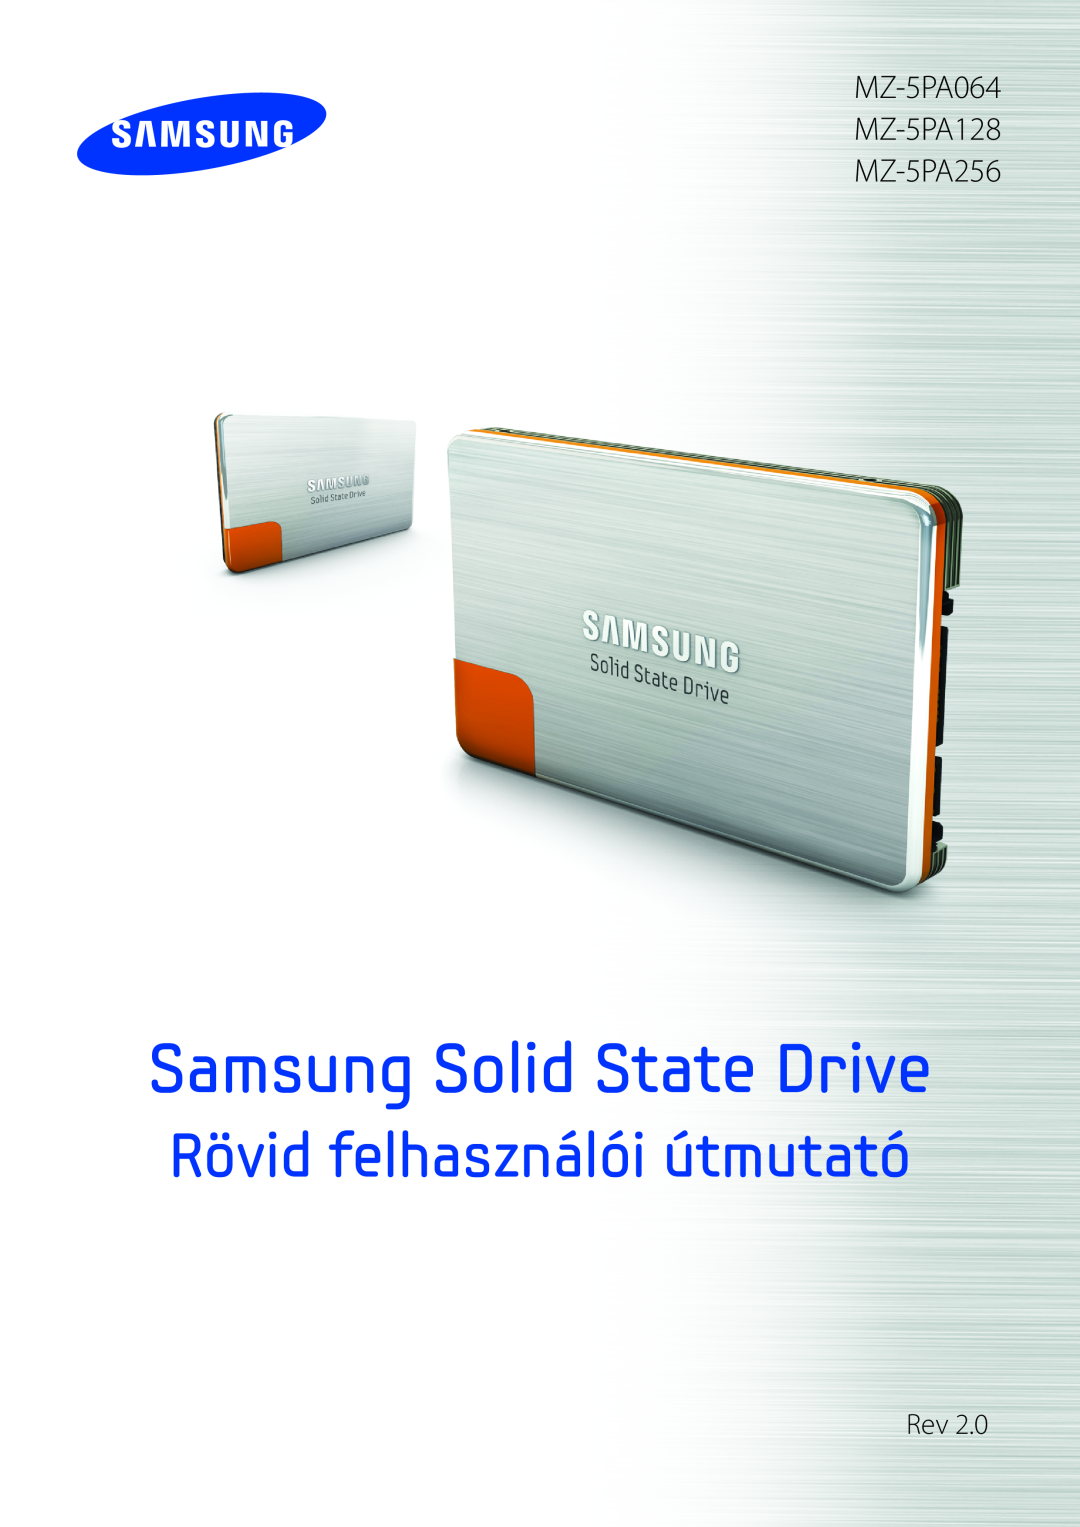 Samsung MZ-5PA256C/EU manual Samsung Solid State Drive, Rövid felhasználói útmutató, MZ-5PA064 MZ-5PA128 MZ-5PA256 